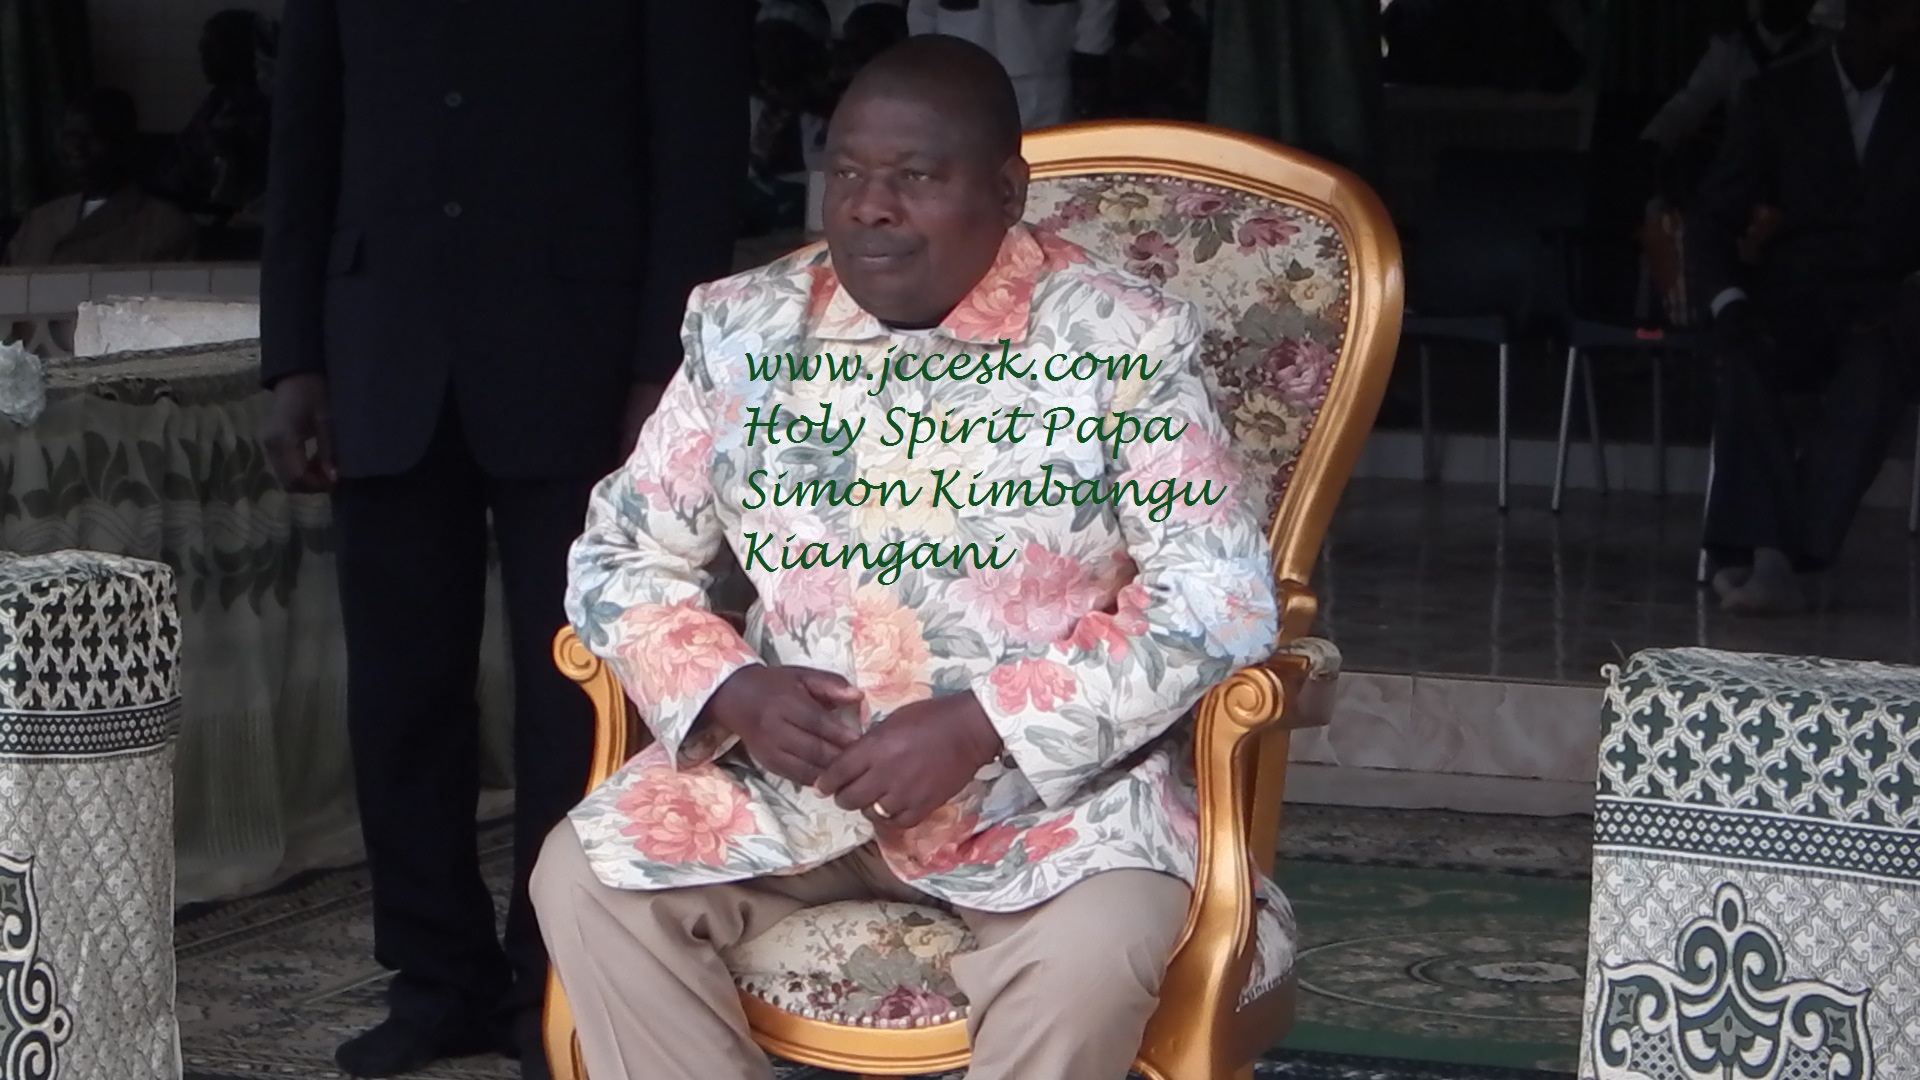 Holy Spirit Papa Simon Kimbangu Kiangani -www.jccesk.com